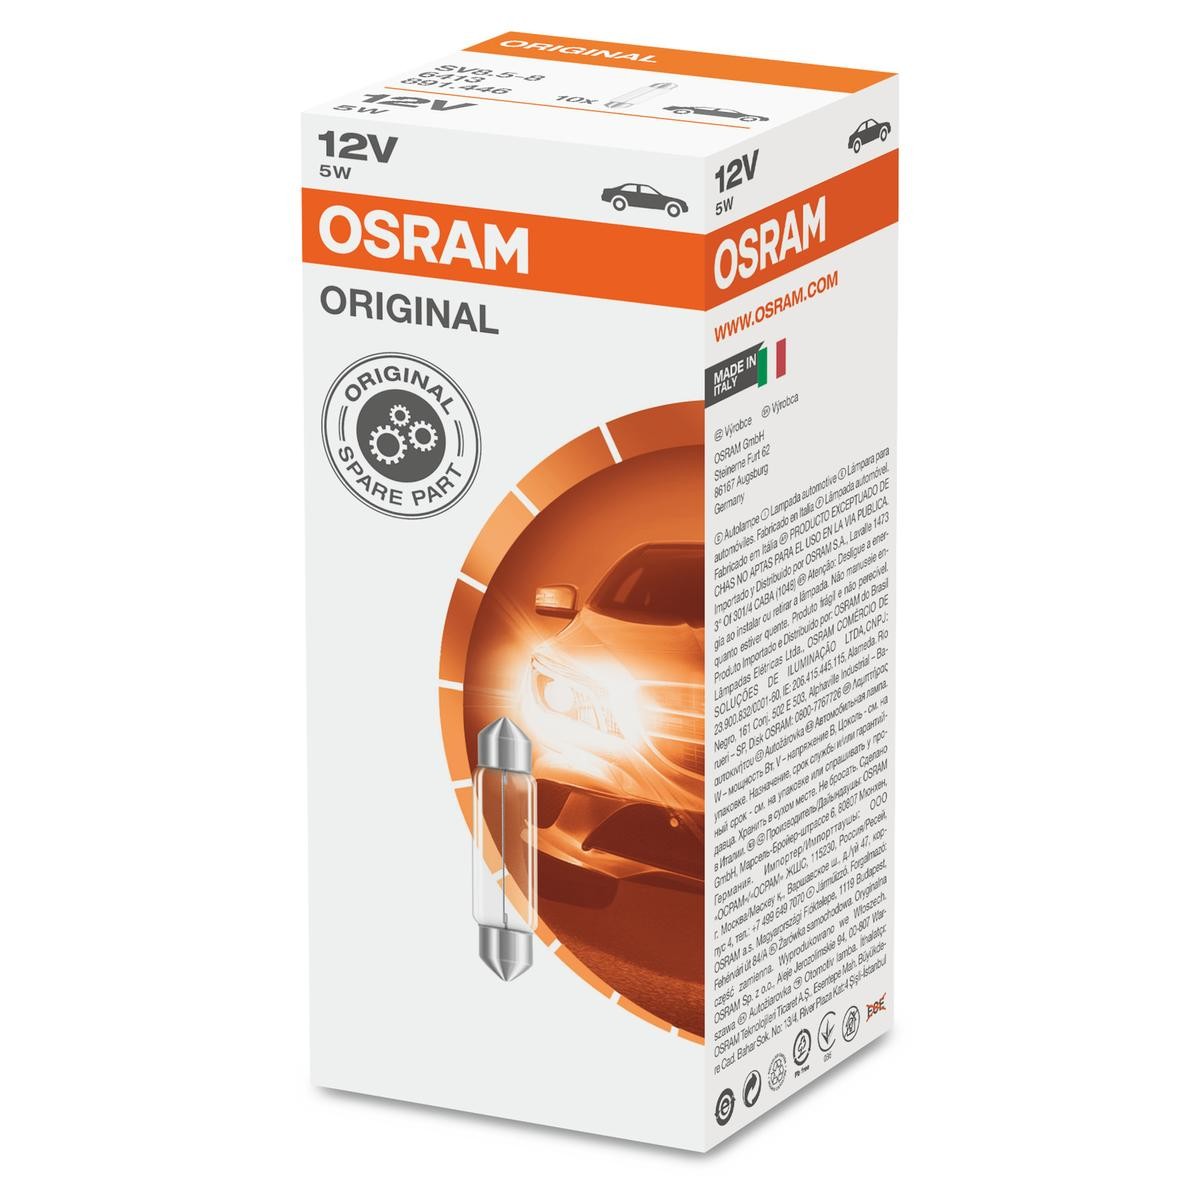 OSRAM ORIGINAL LINE Socket Bulb, 12V, 5W Bulb, interior light 6413 buy